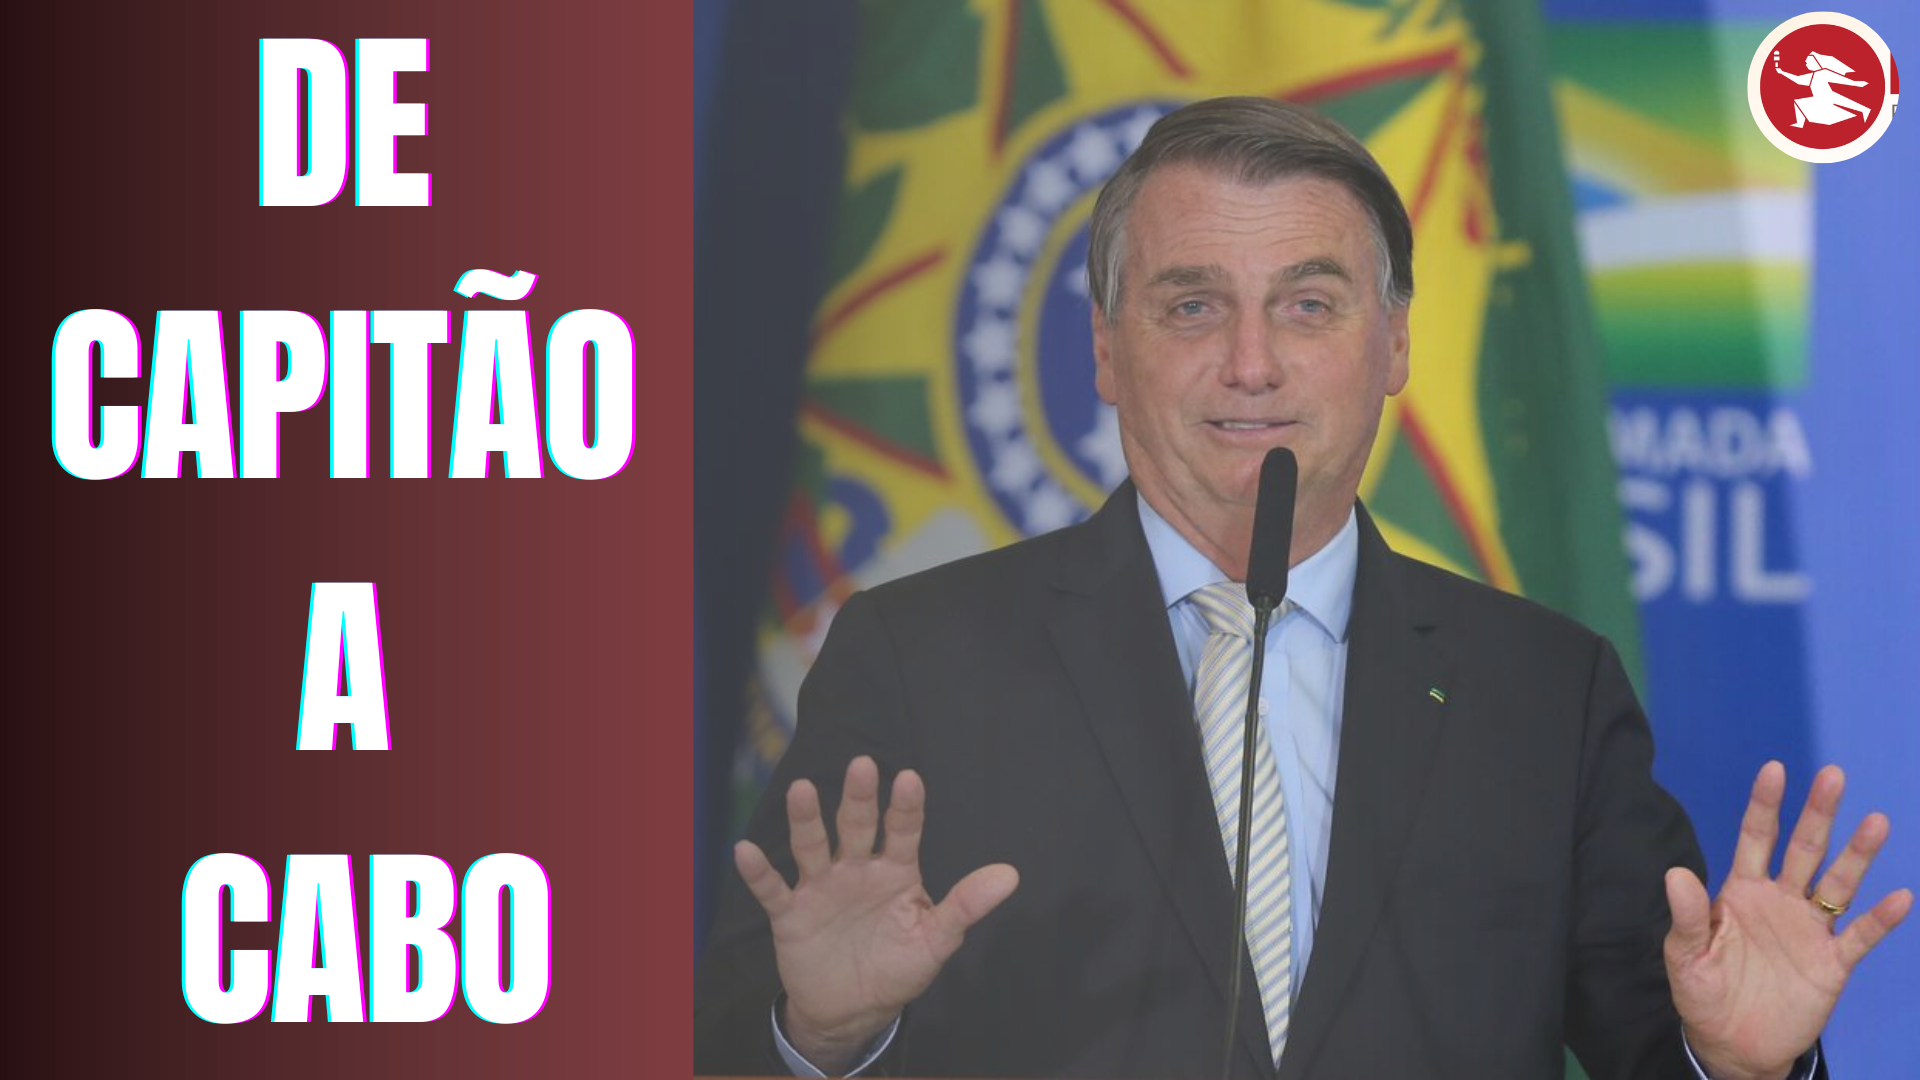 BRASÍLIA JÁ: Bolsonaro – de capitão a cabo